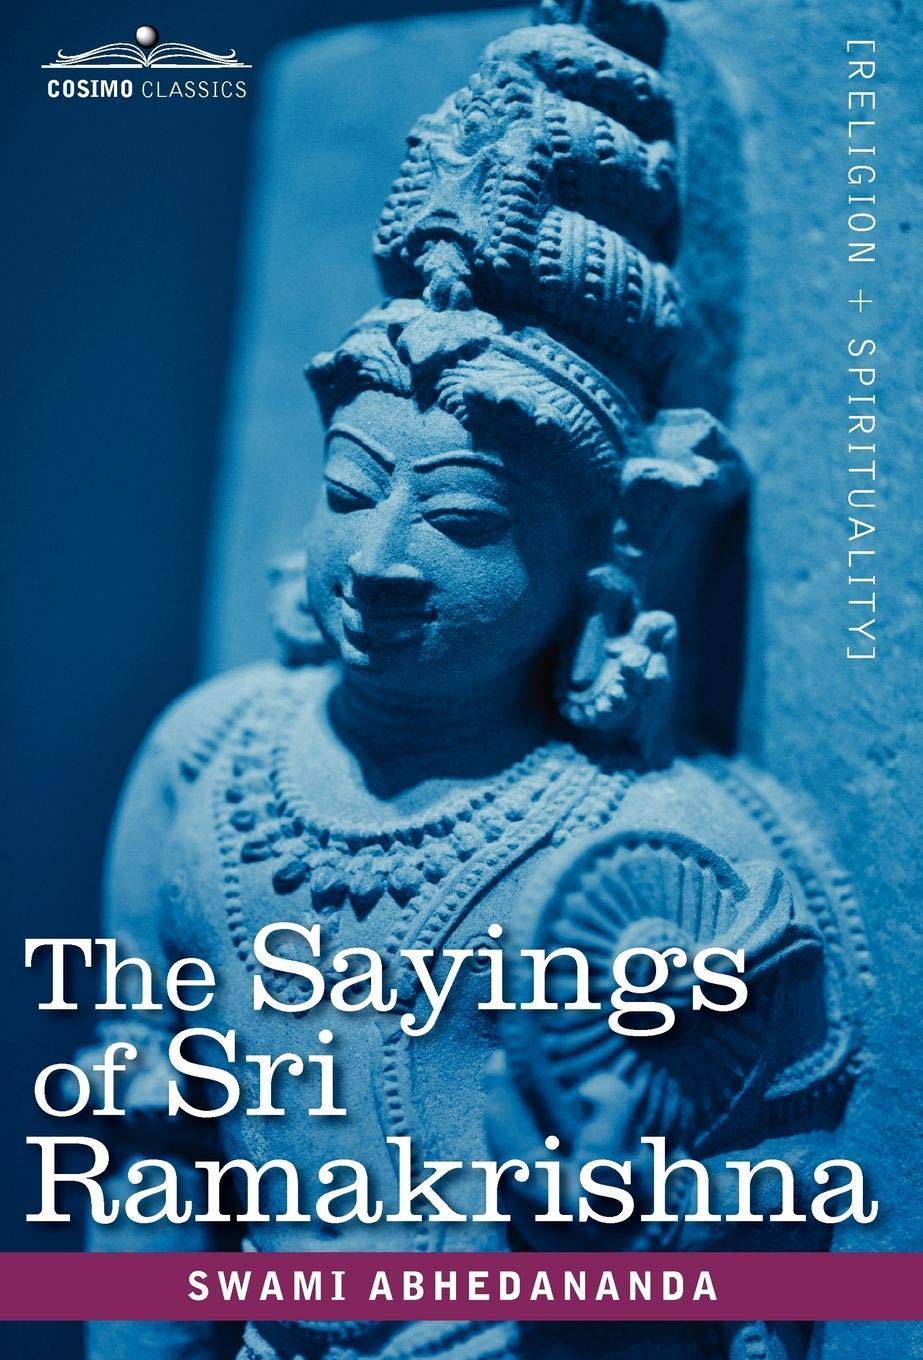 THE SAYINGS OF SRI RAMAKRISHNA